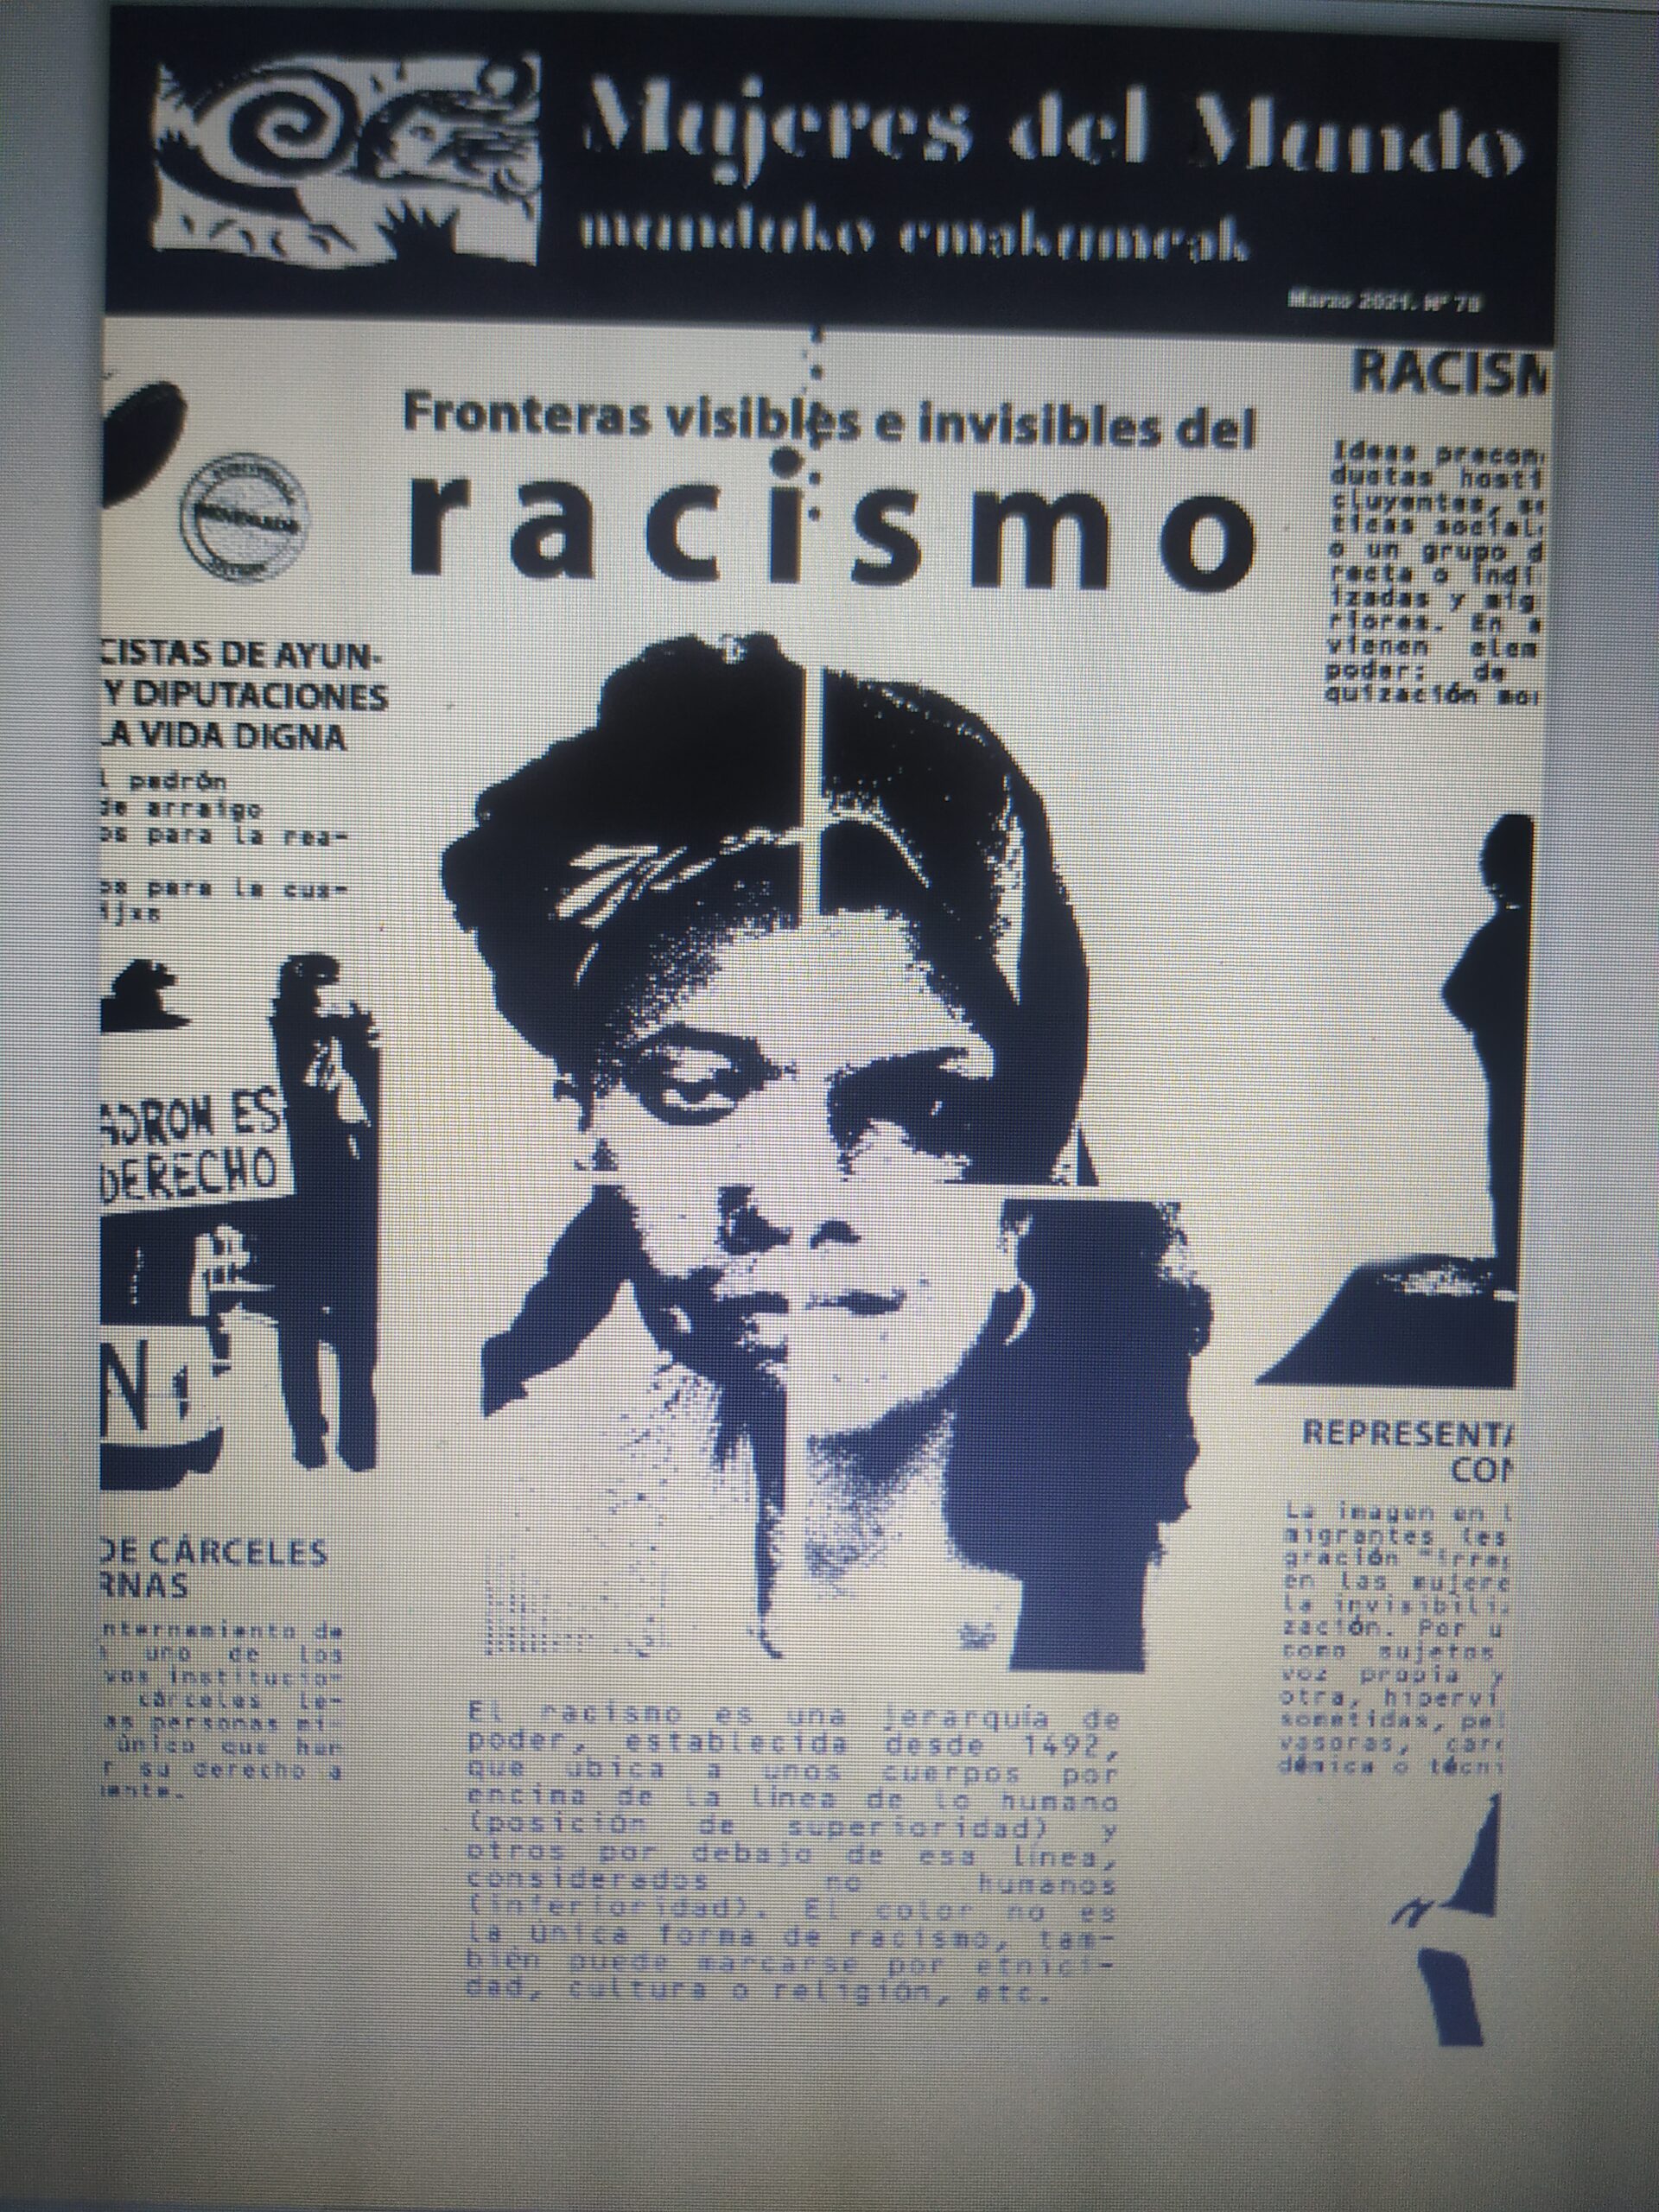 Fronteras visibles e invisibles del racismo, marzo 2021, nº 78